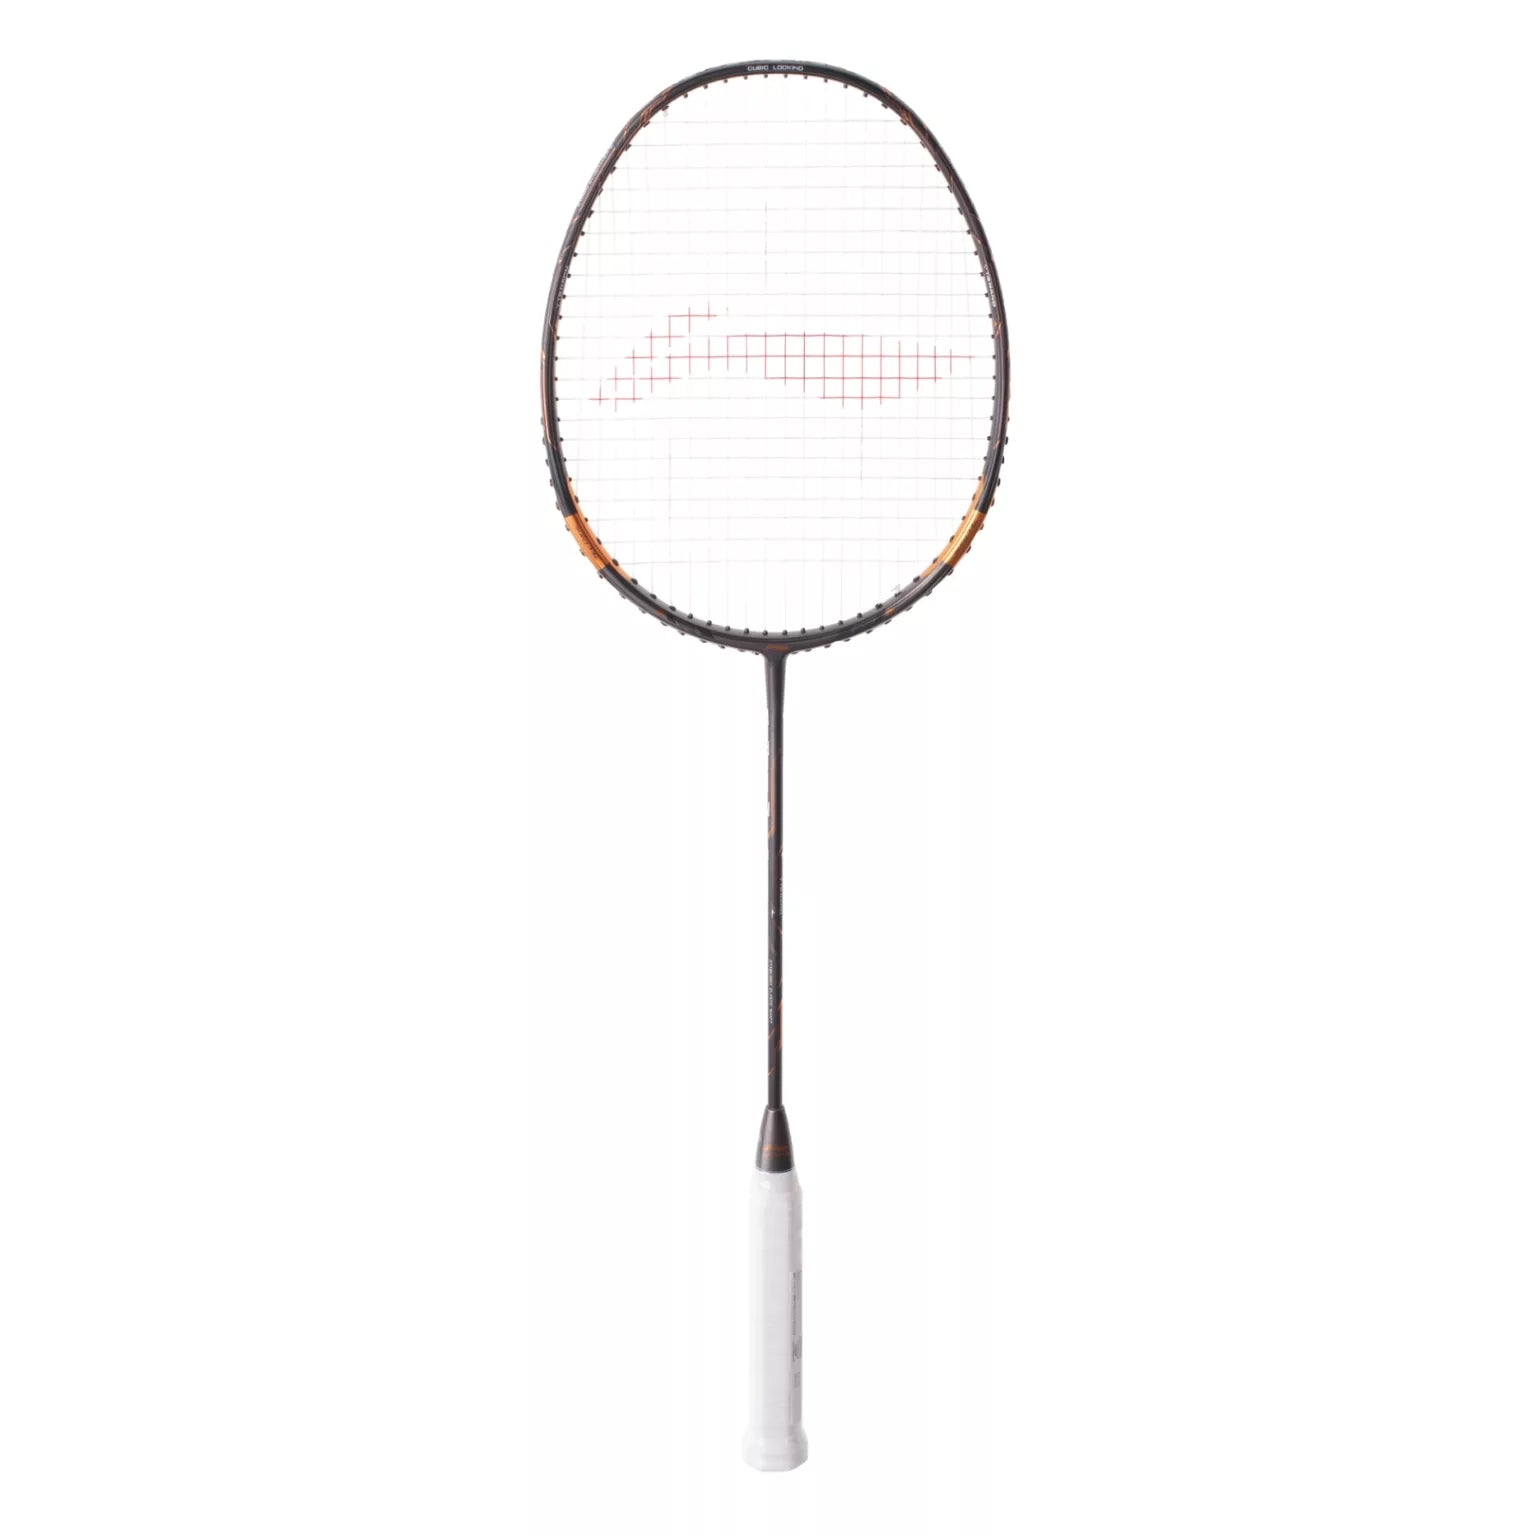 LI-NING Tectonic 7C Combat Badminton Racket | Power and Control